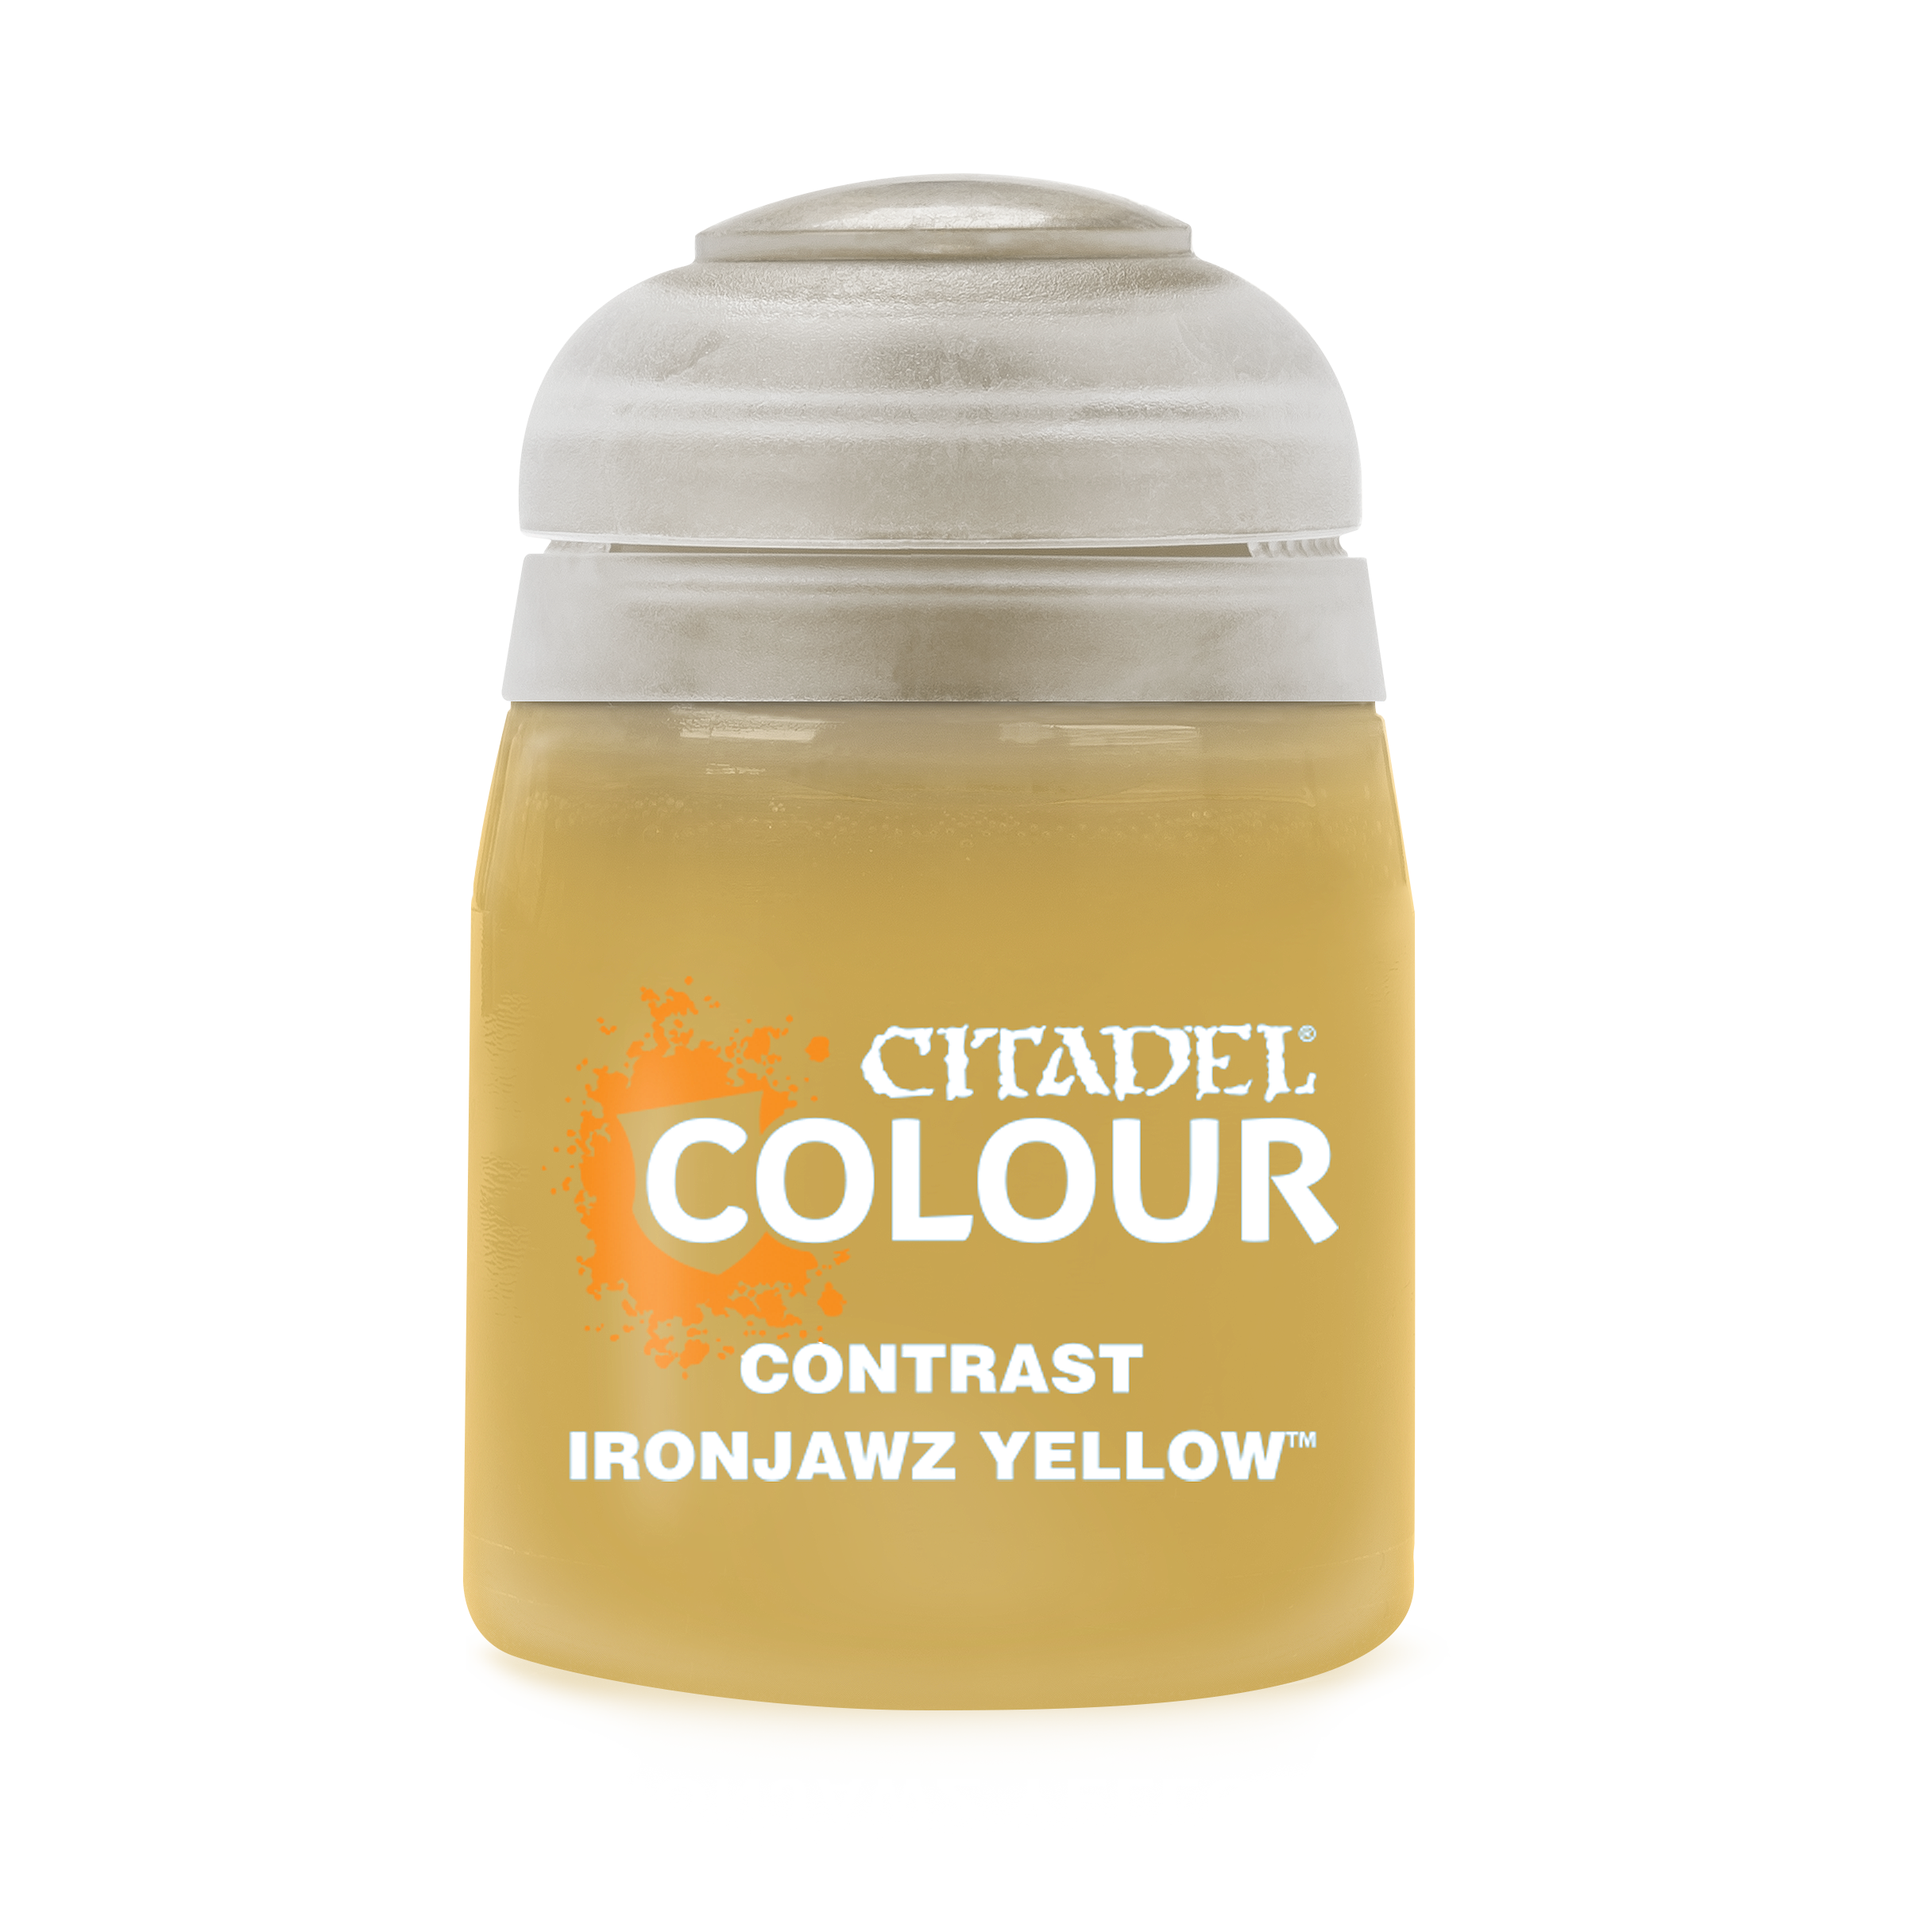 Contrast Ironjawz Yellow - Citadel Colour